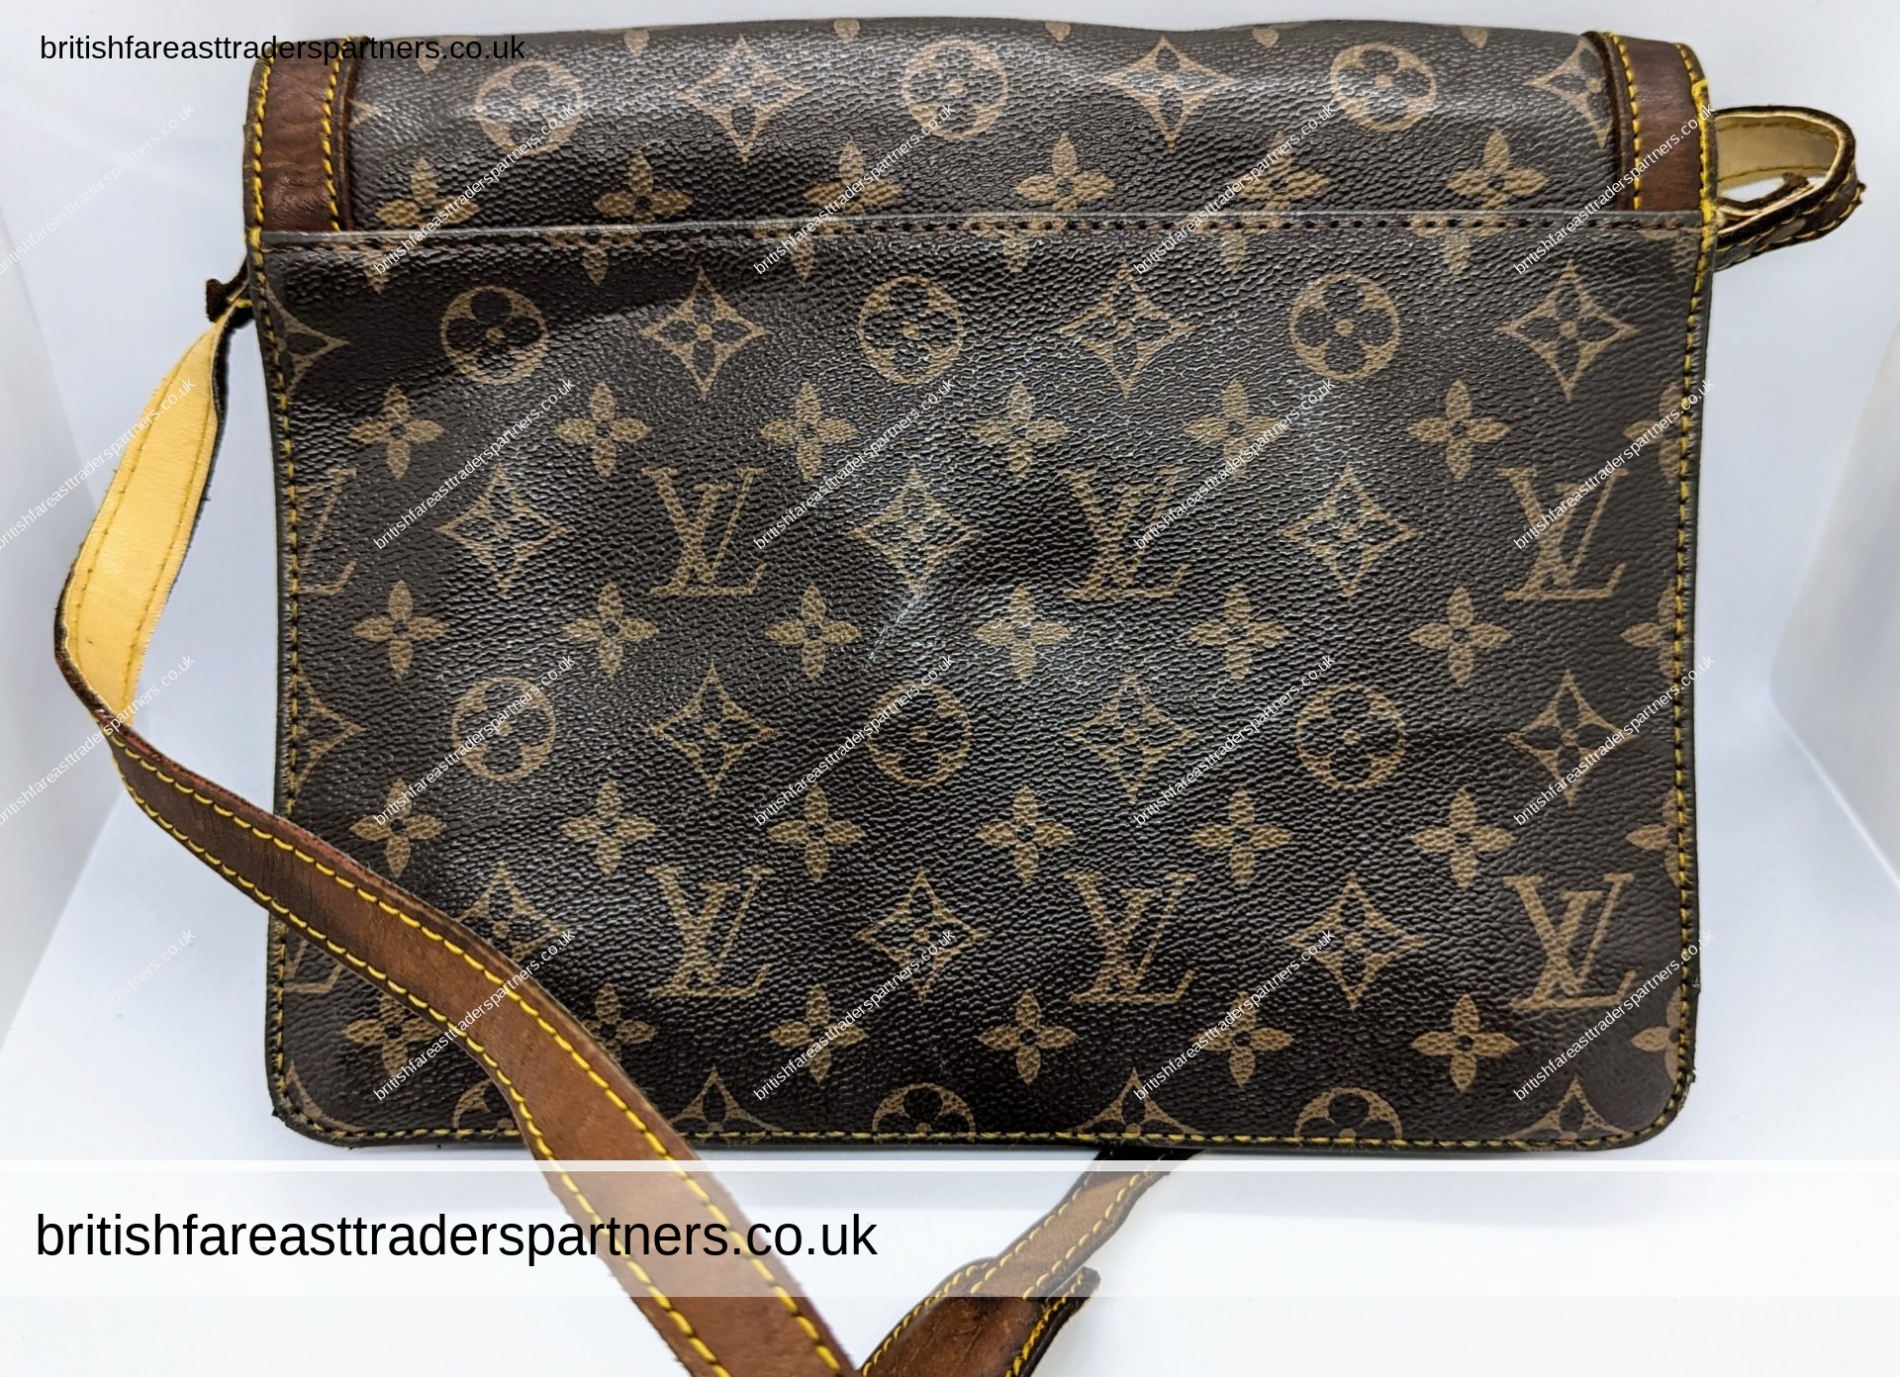 VINTAGE LOUIS VUITTON Paris France Envelope Messenger BAG Rare Collectible  Find - British & Far East Traders Lifestyle